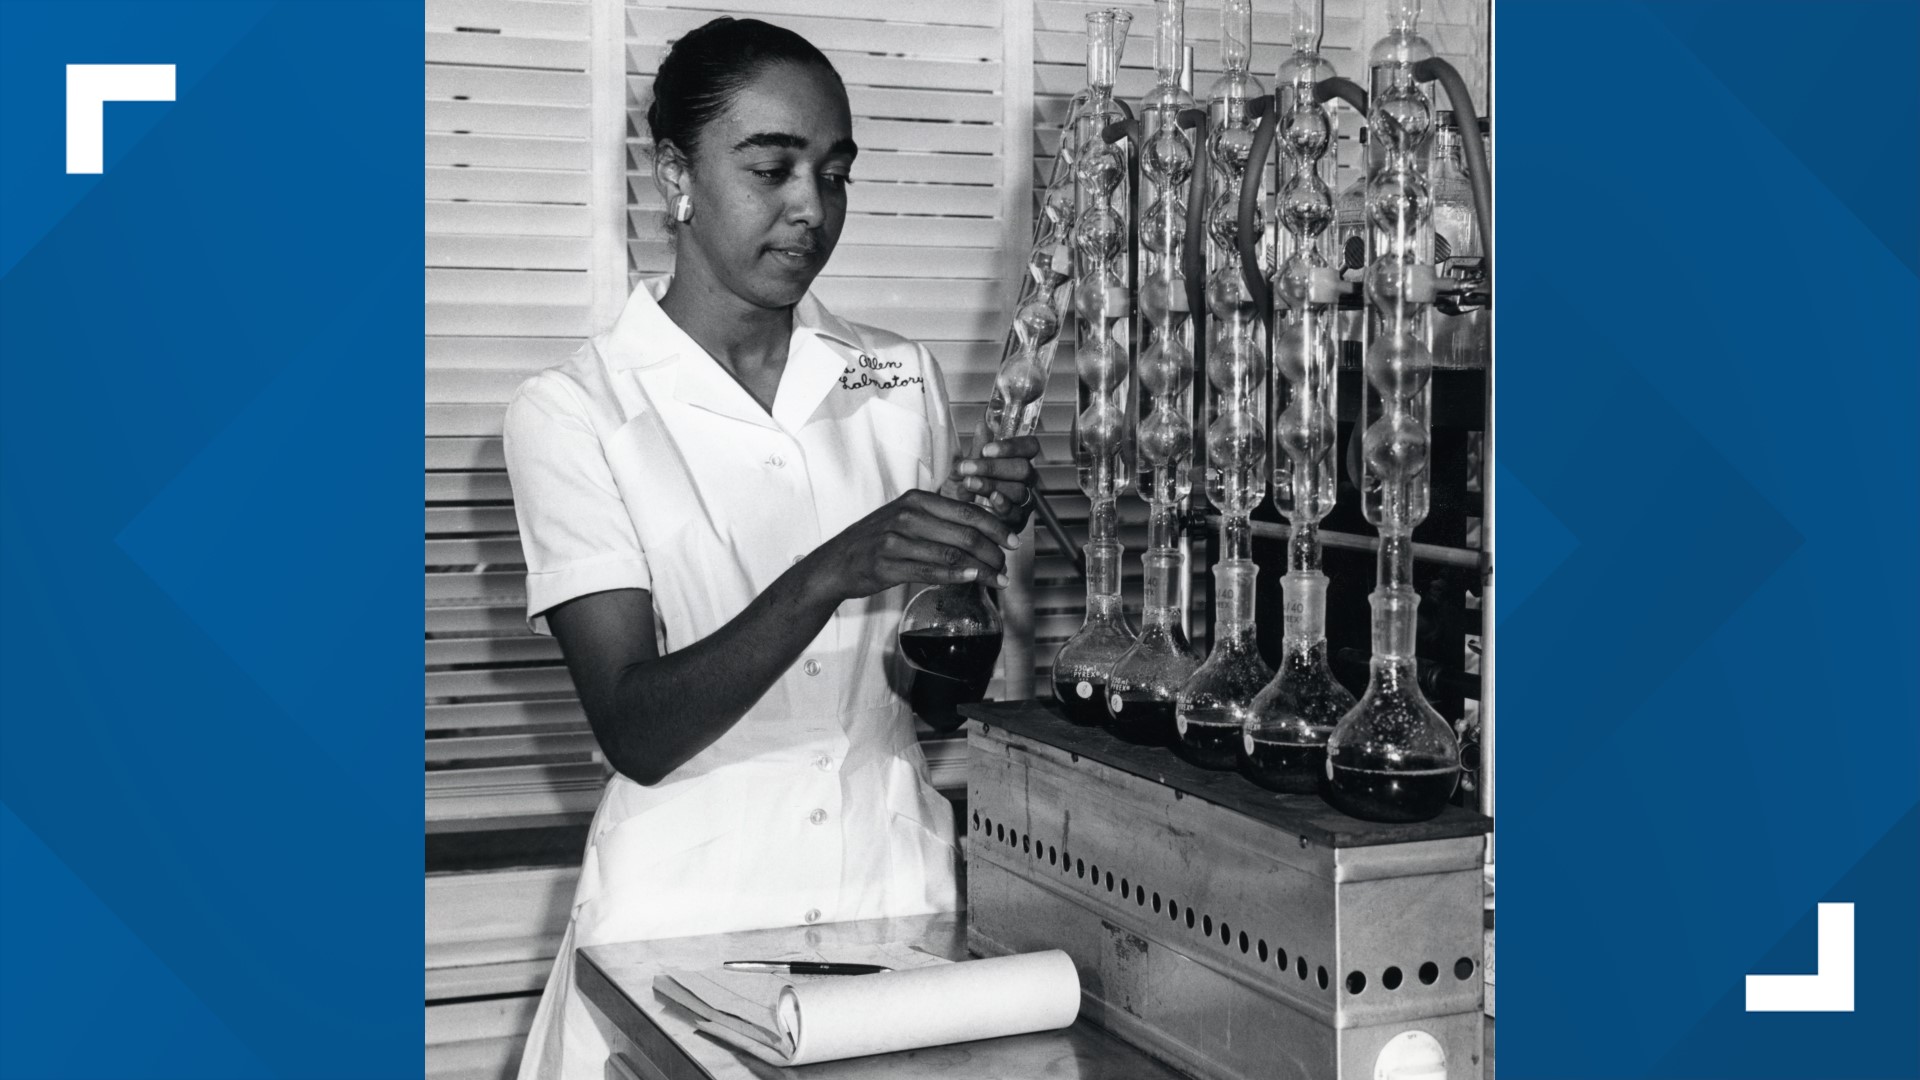 Elmer Lucille Allen was the first African American chemist at Brown Forman in Louisville.